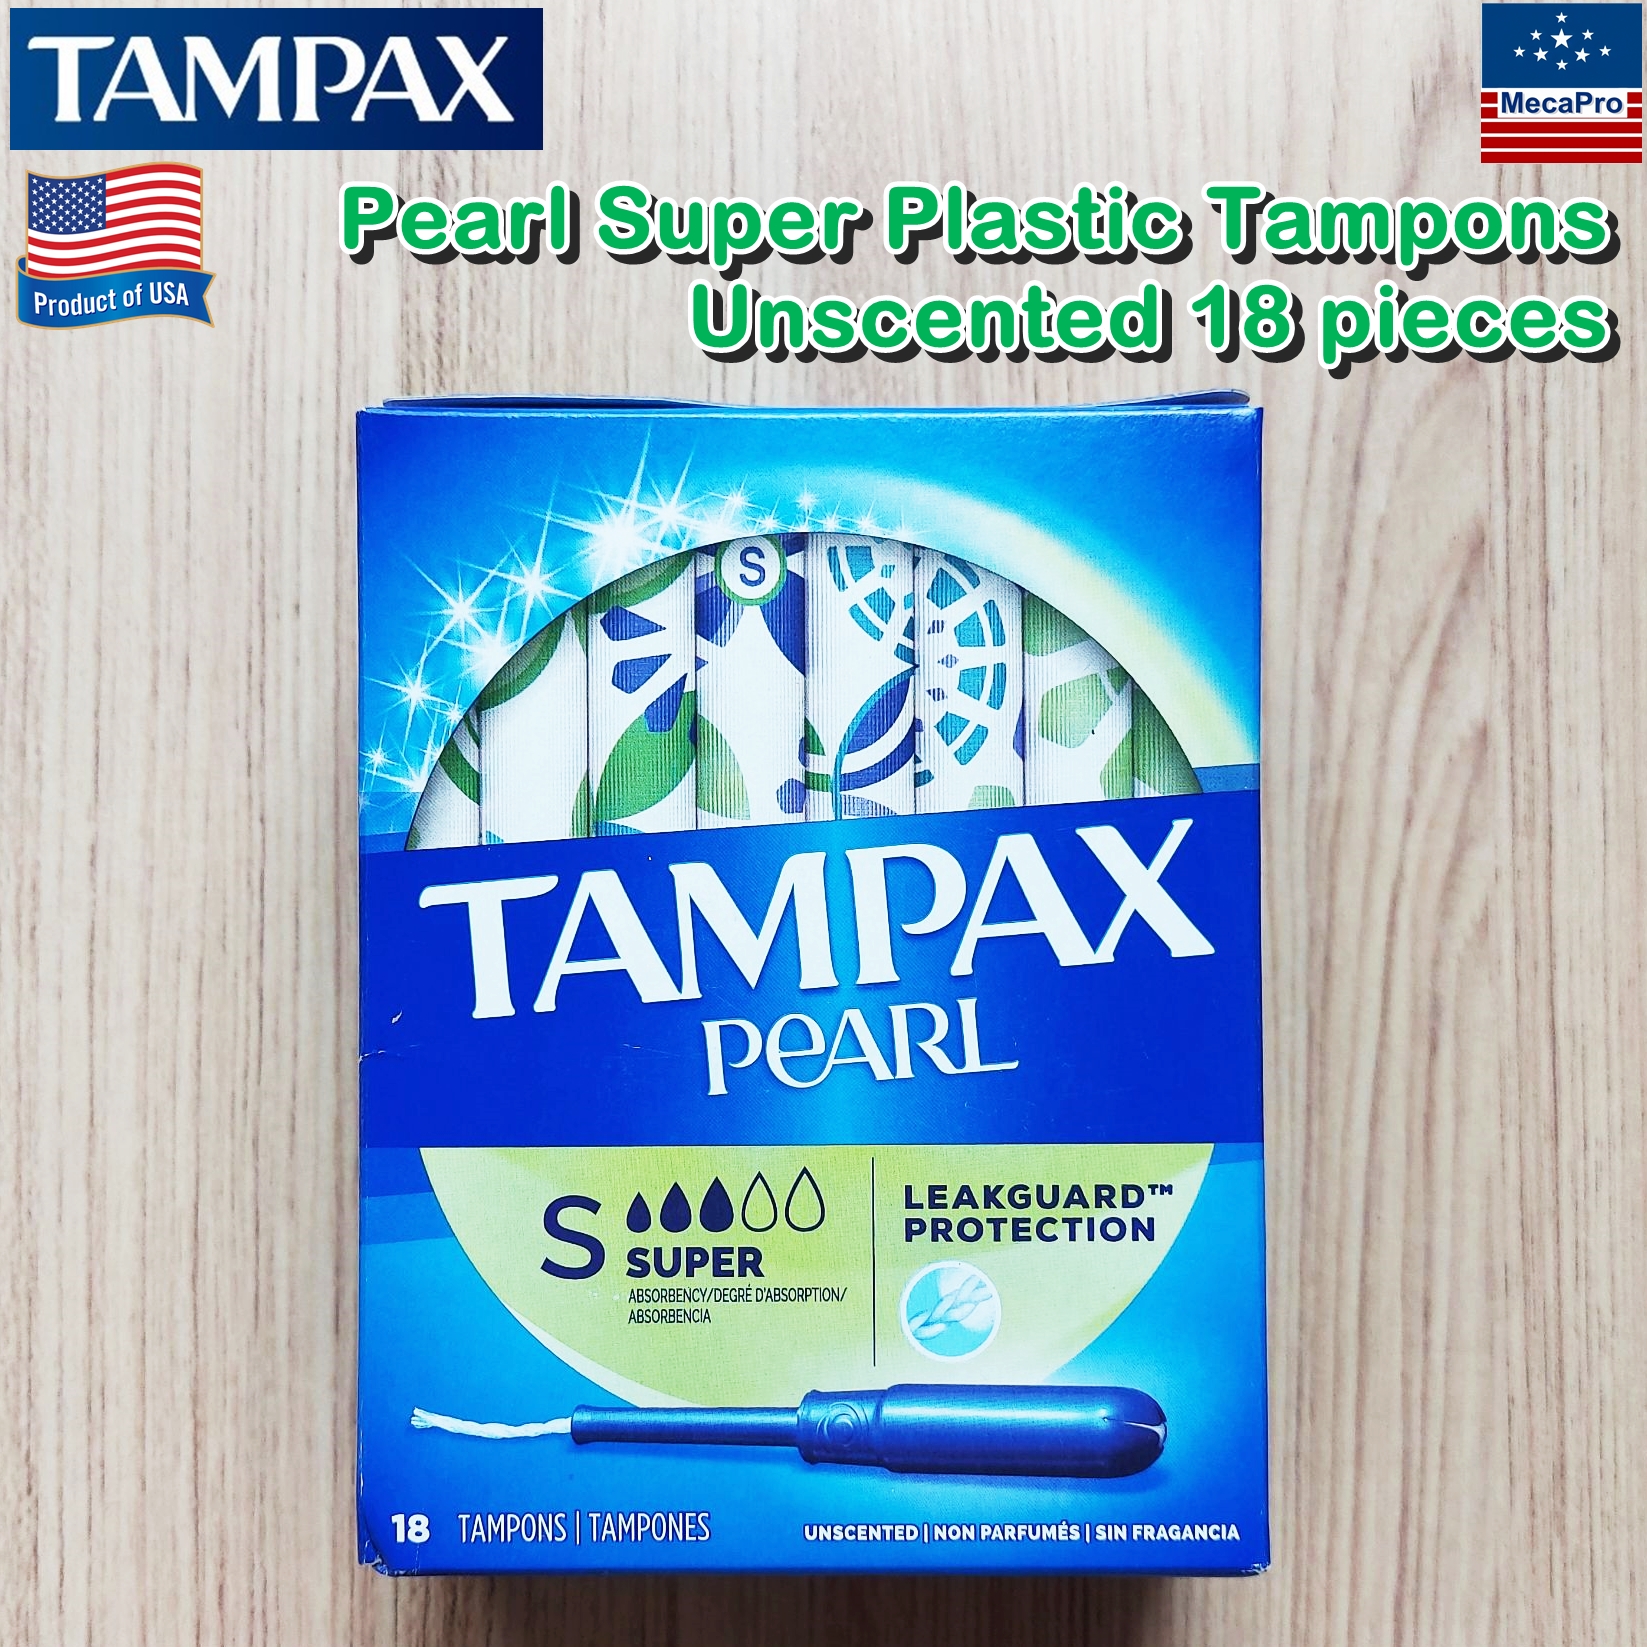 Tampax® Pearl Super Plastic Tampons Unscented 18 Pieces ผ้าอนามัยแบบสอด 18 ชิ้น เหมาะกับวันมามาก